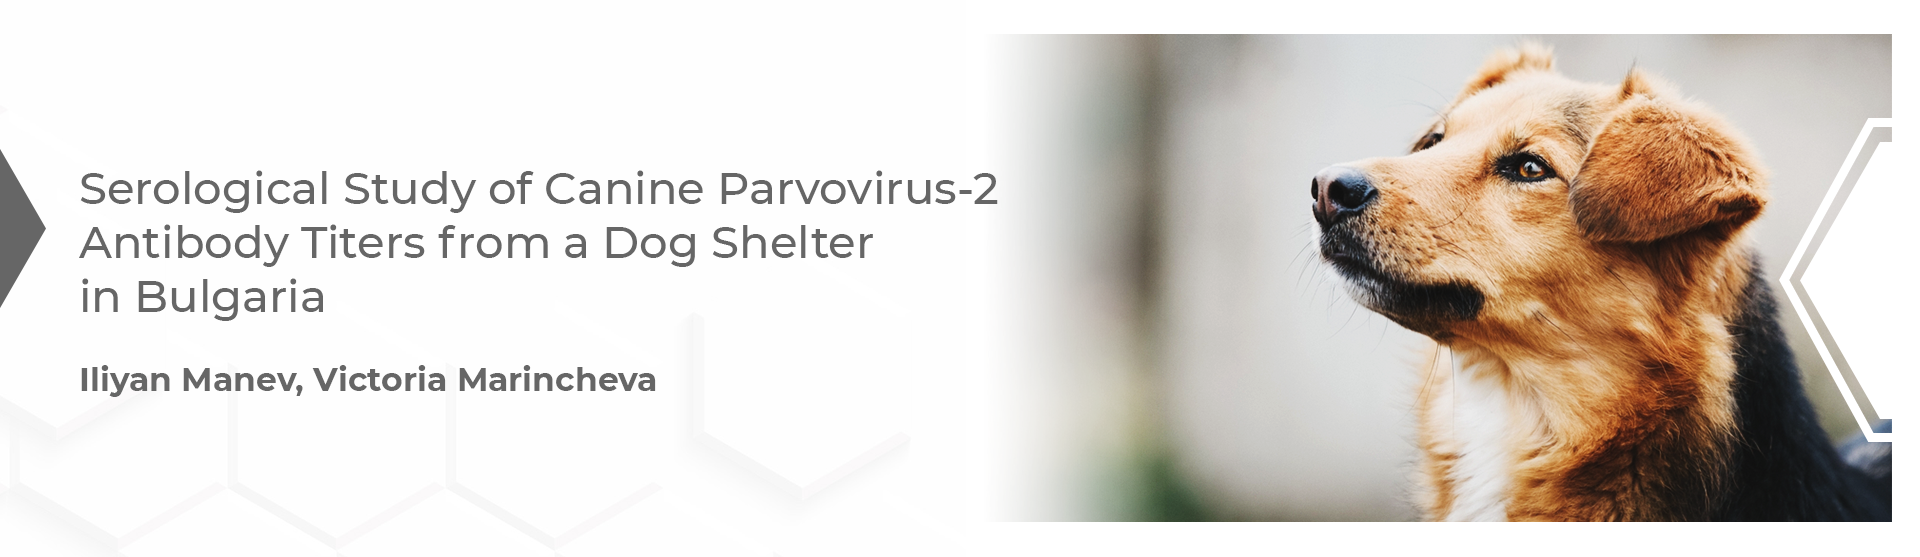 Serological Study of Canine Parvovirus-2 Antibody Titers